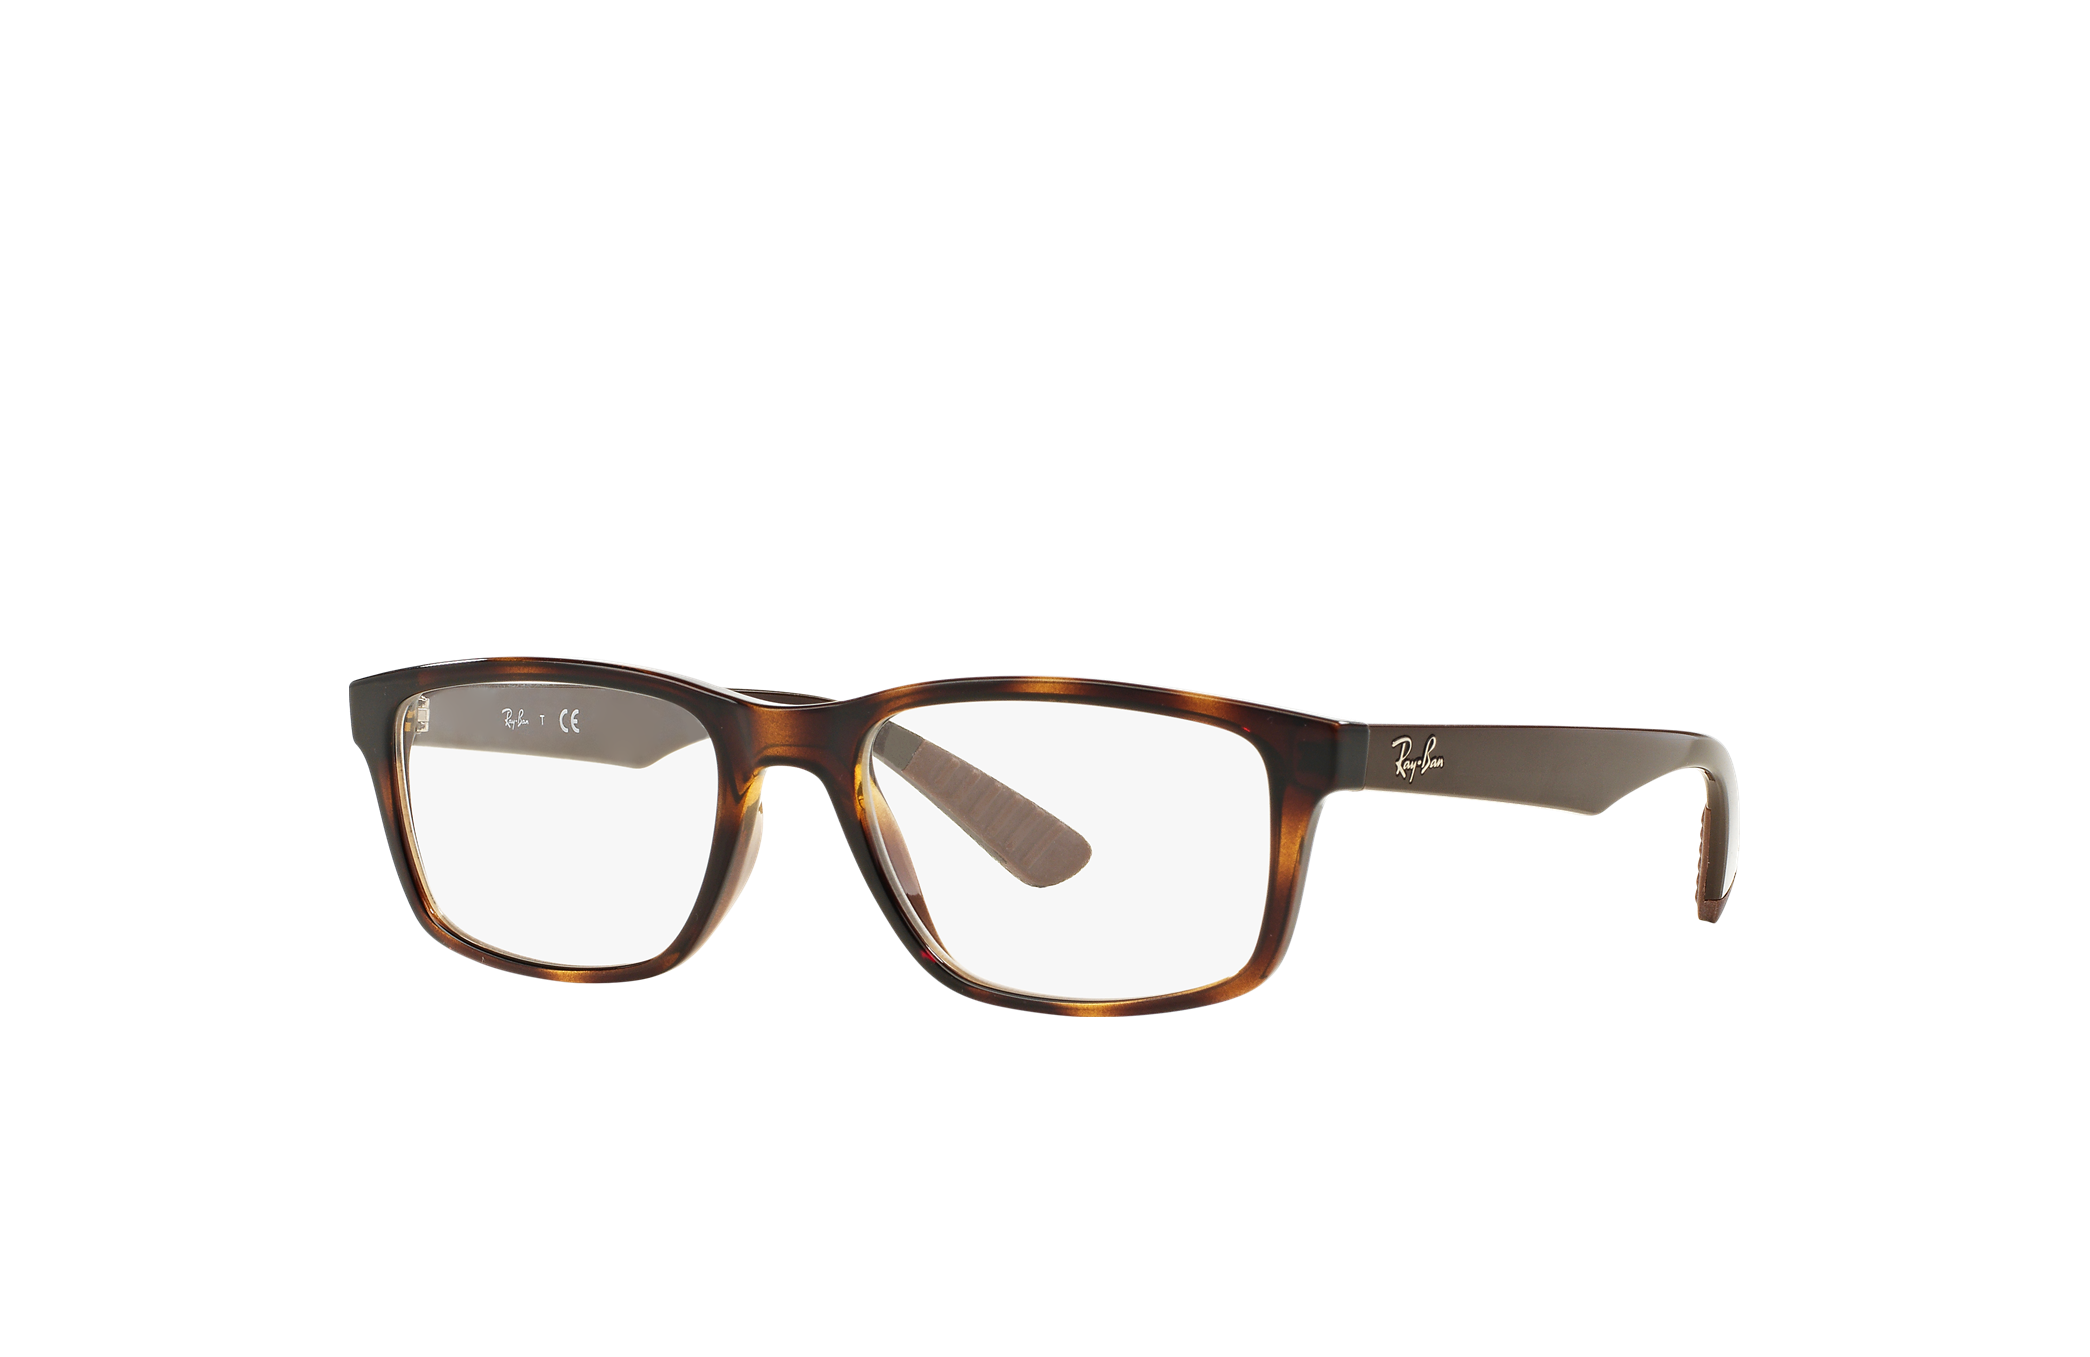 Rb7063 Optics Eyeglasses with Havana Frame | Ray-Ban®